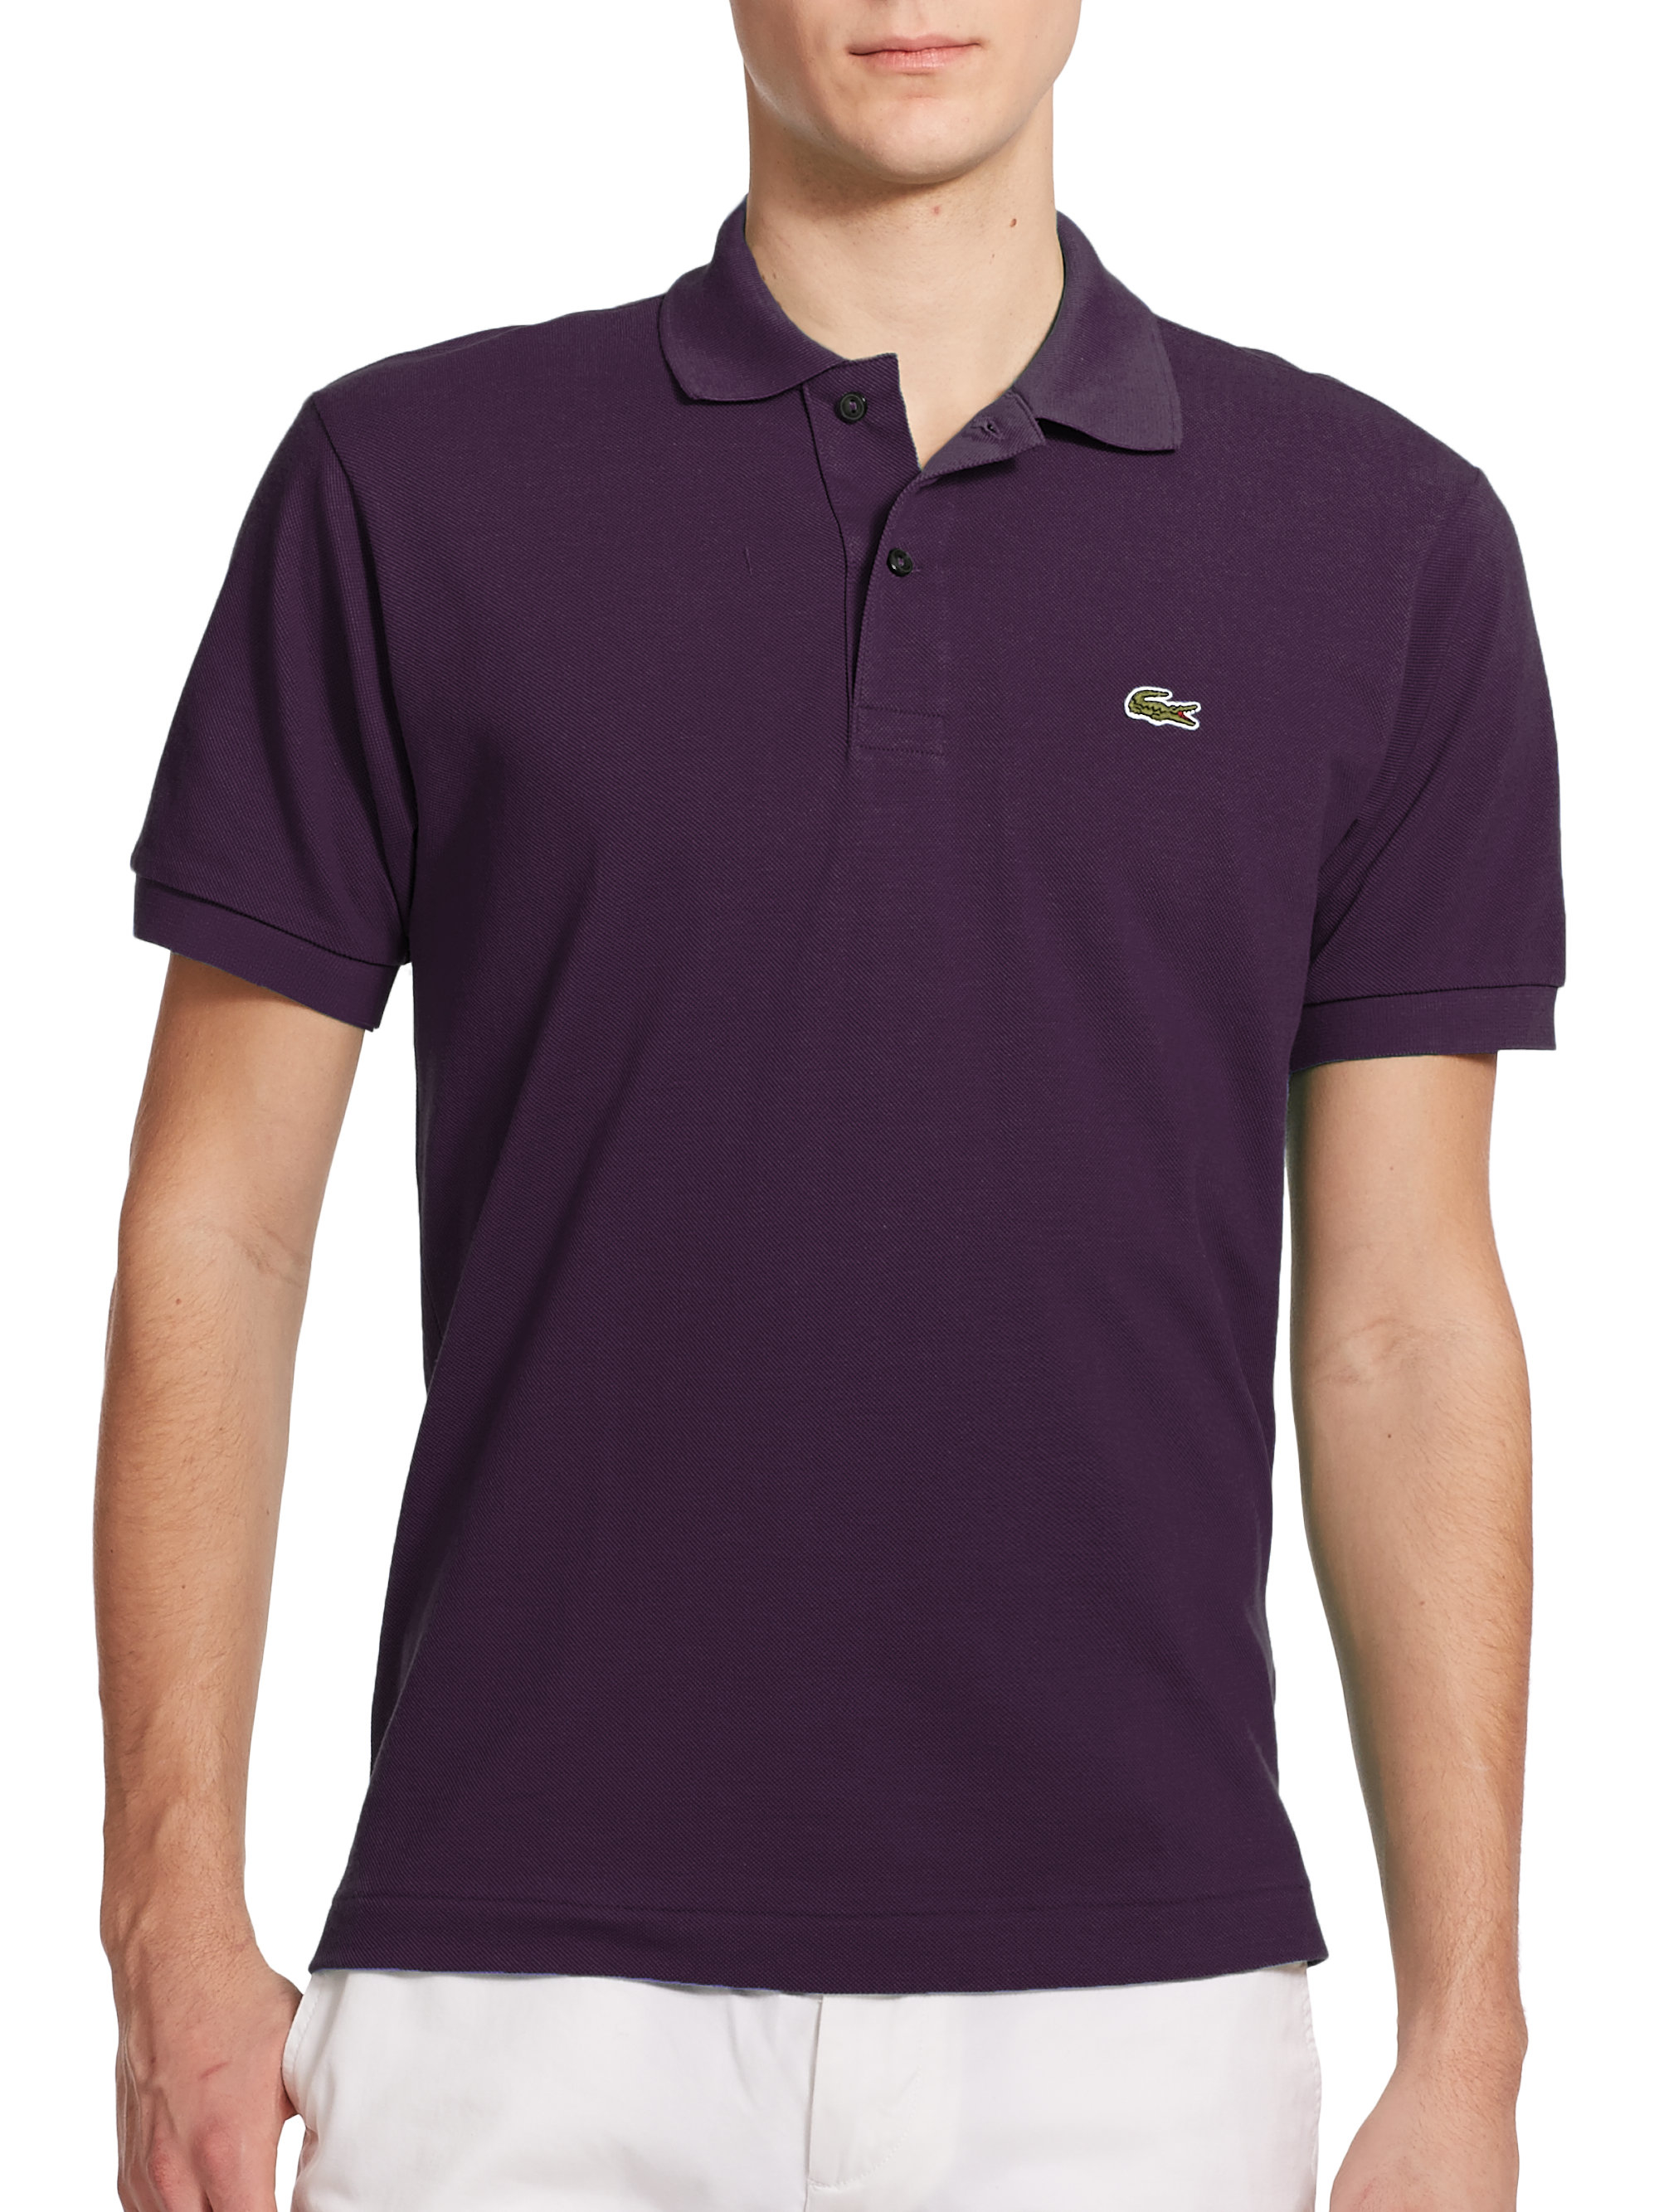 lacoste polo shirt purple, OFF 78%,Buy!